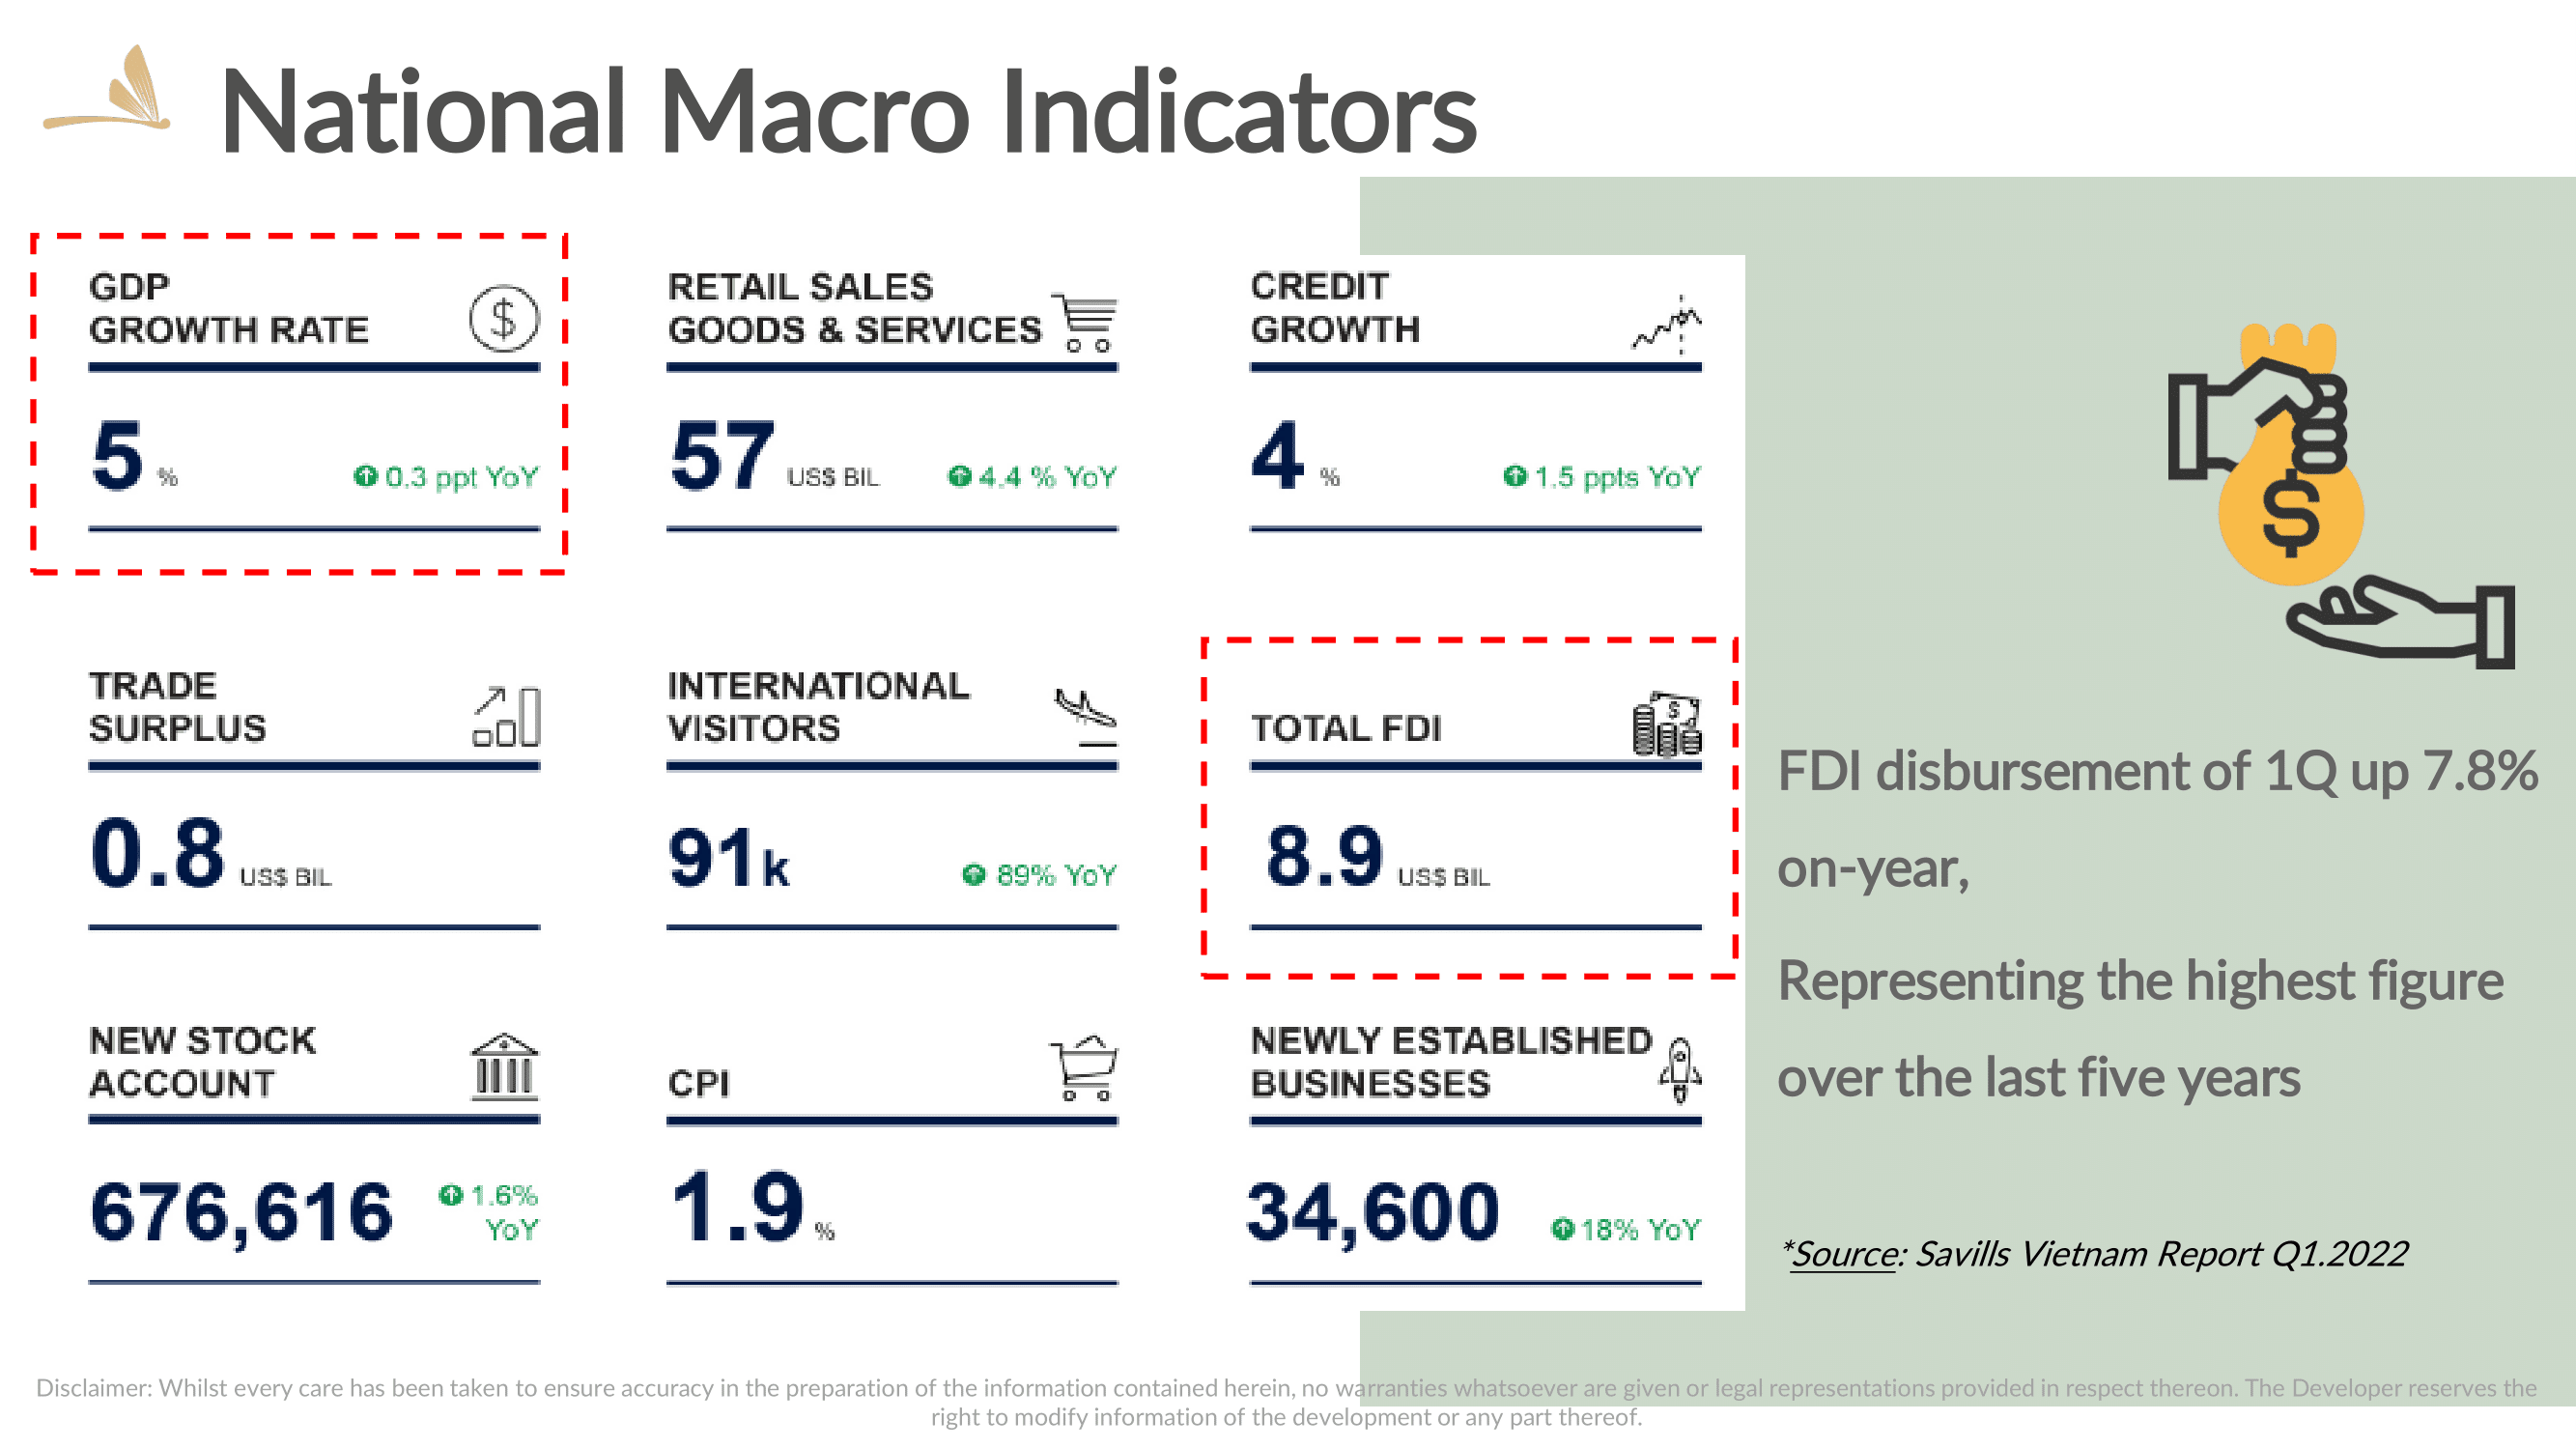 National Macro Indicators